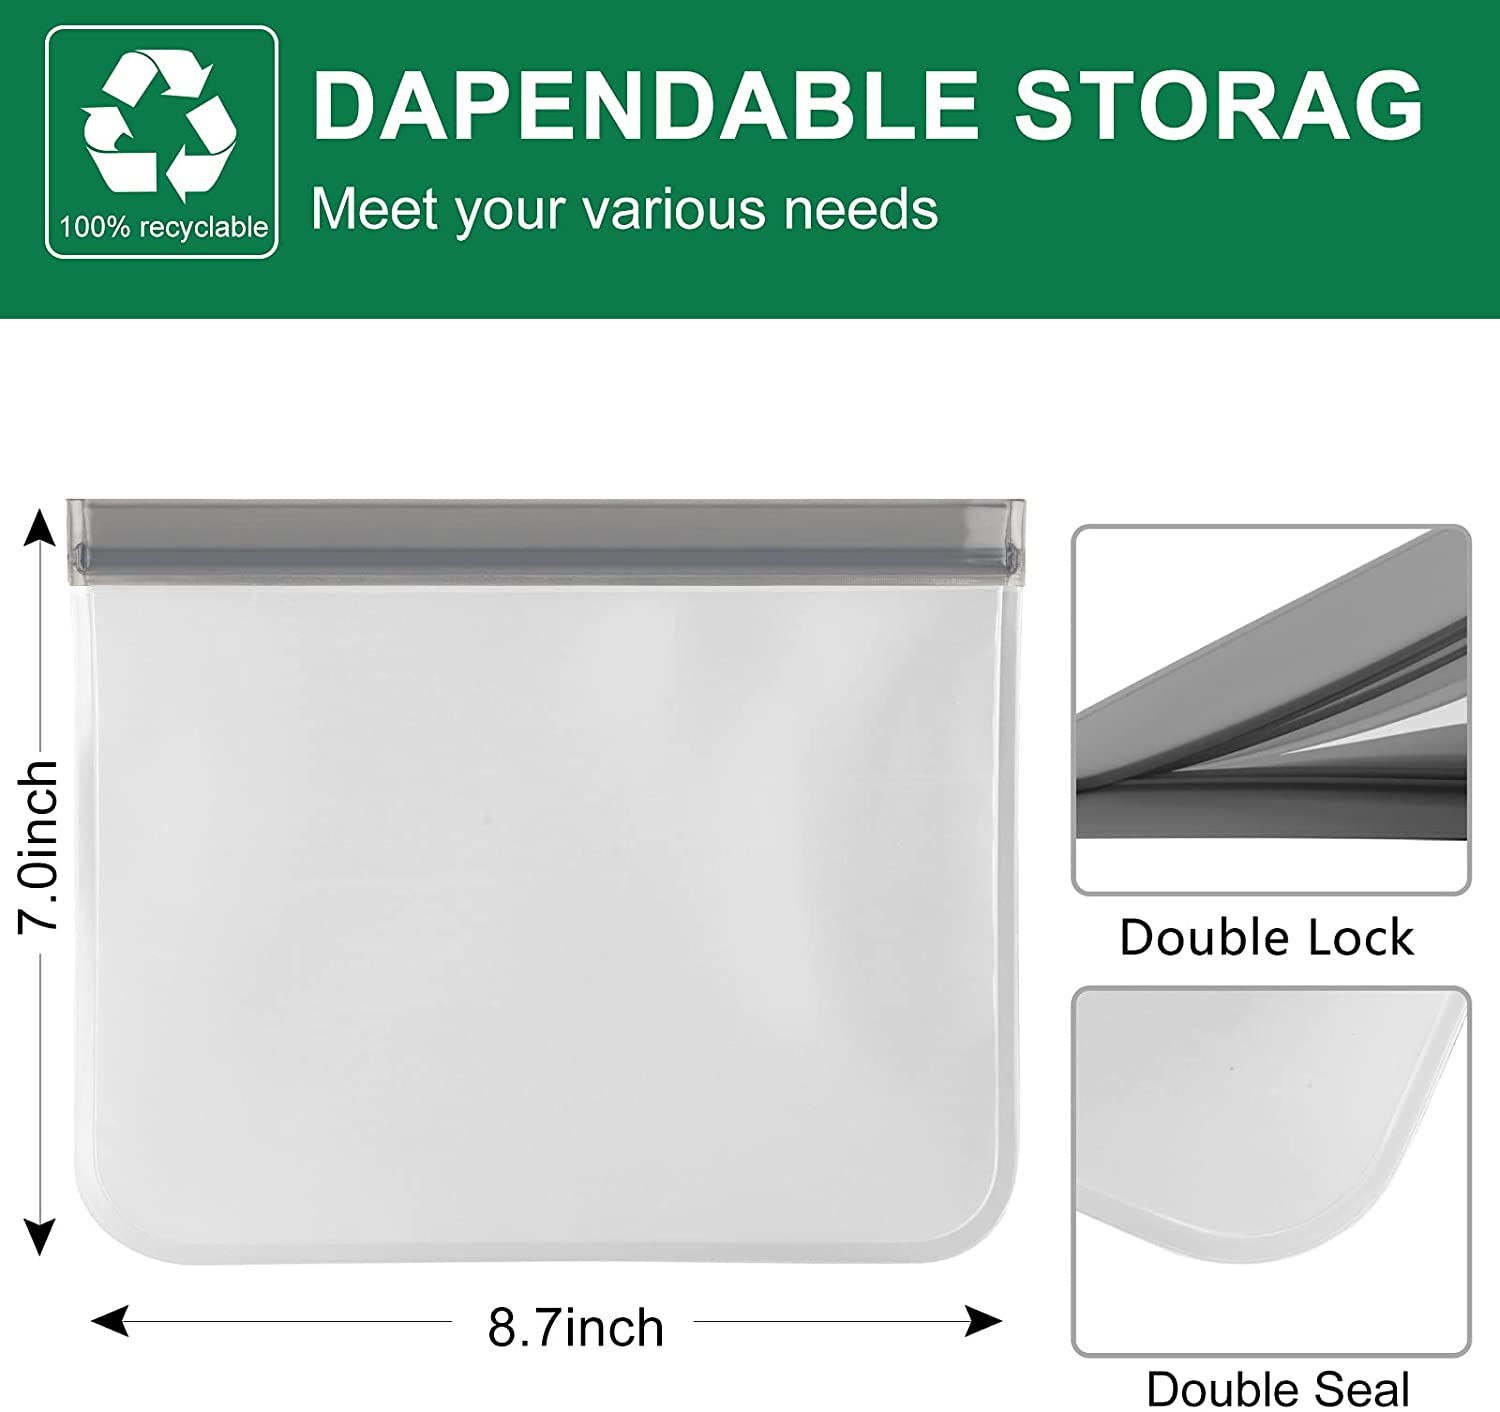 Lerine 24 Pack Dishwasher Safe Reusable Bags Silicone, Leakproof